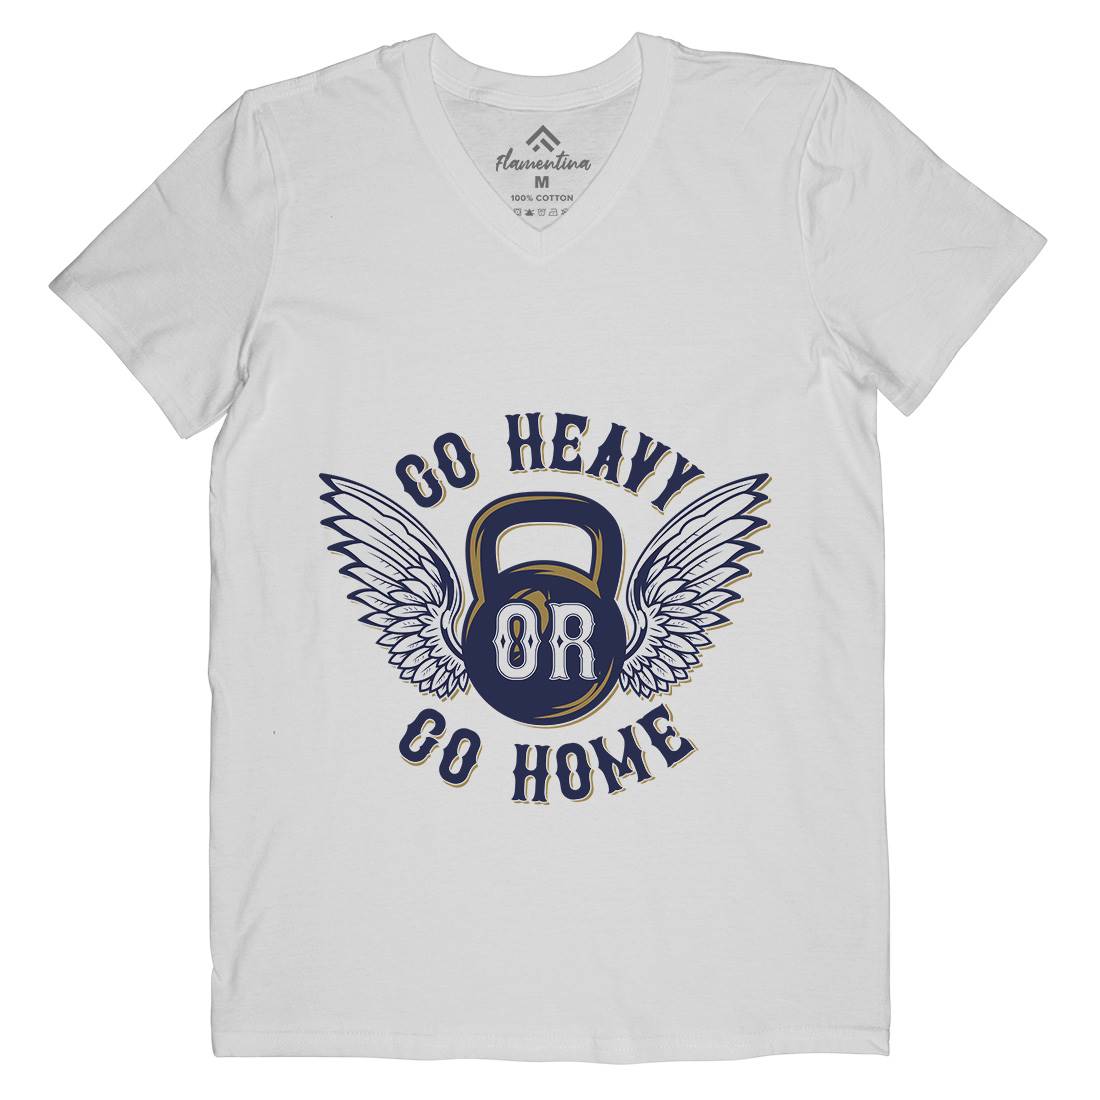 Heavy Mens Organic V-Neck T-Shirt Gym B303